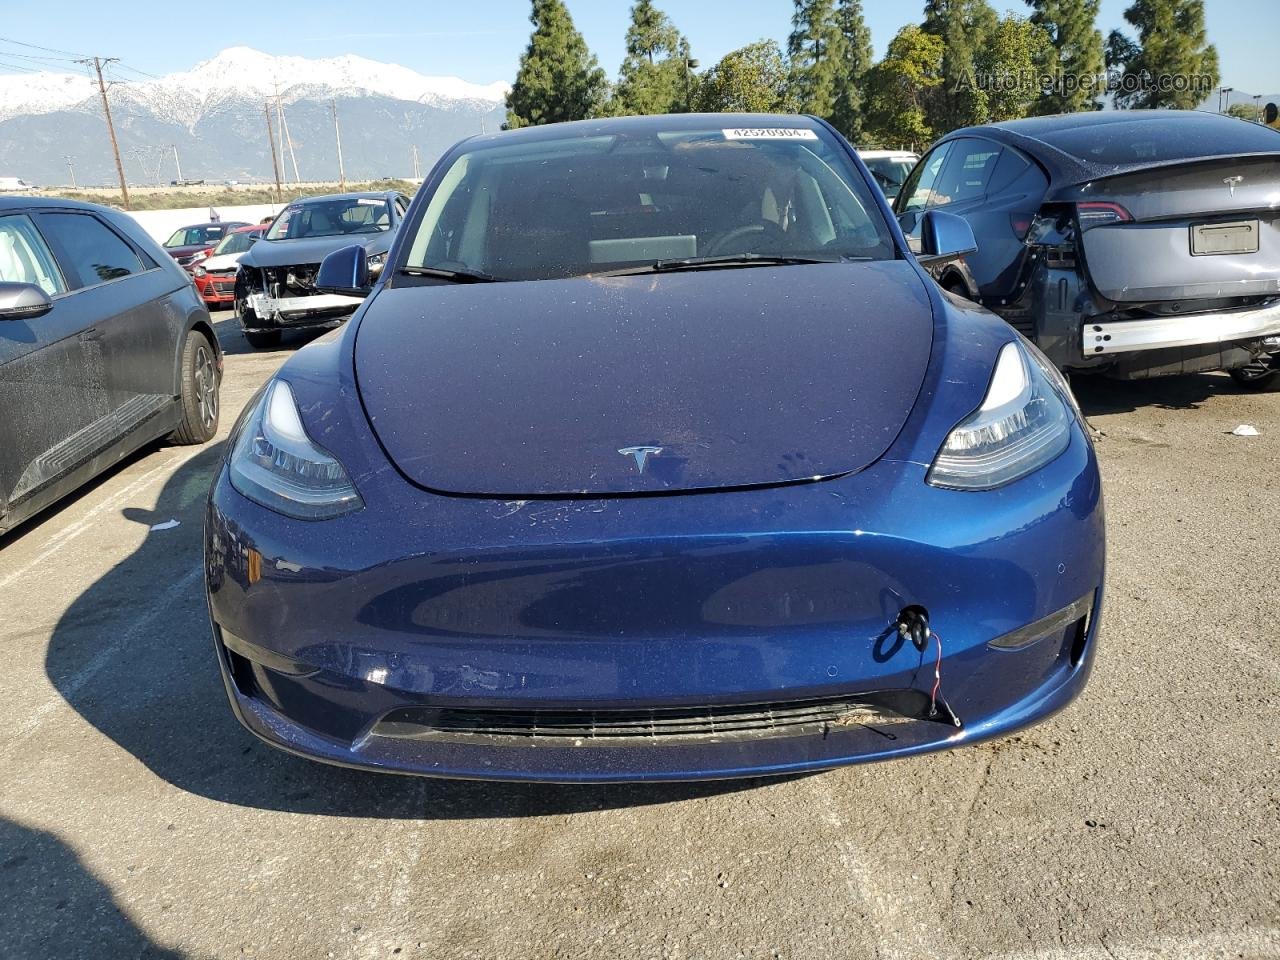 2022 Tesla Model Y  Синий vin: 7SAYGDEE0NF357216